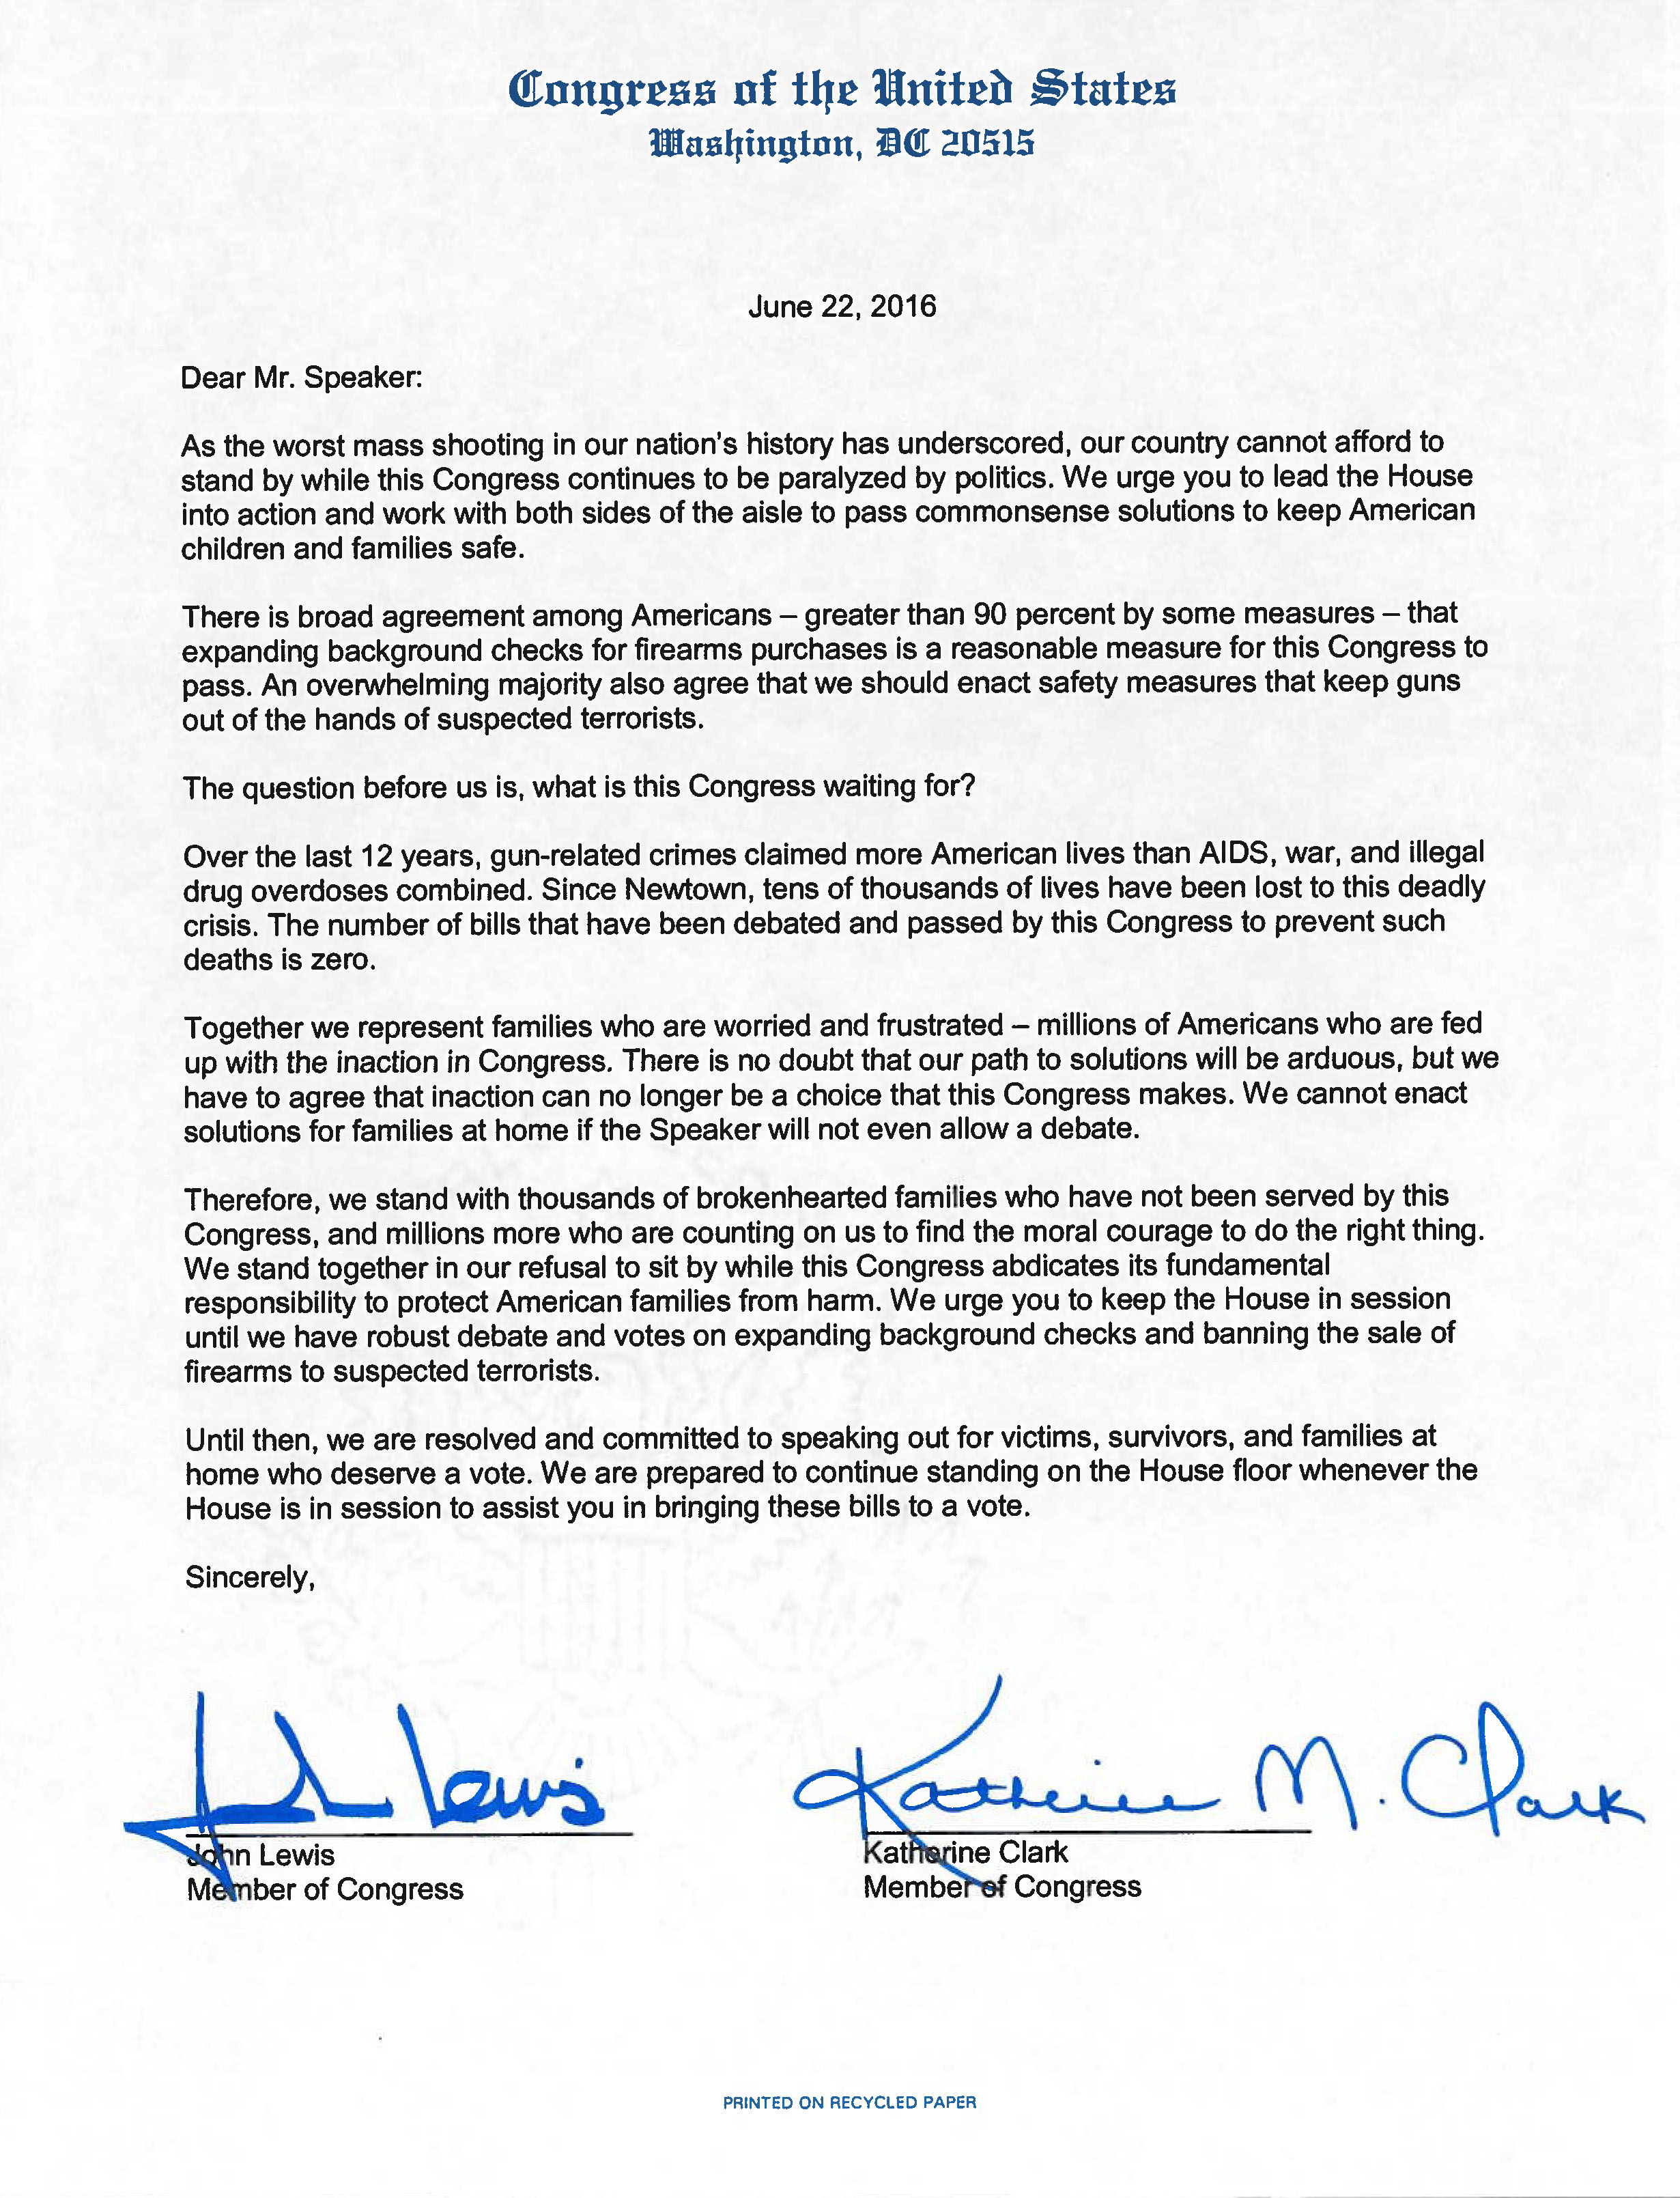 Letter delivered to Speaker Paul Ryan, June 22, 2016. (Justin Unga)